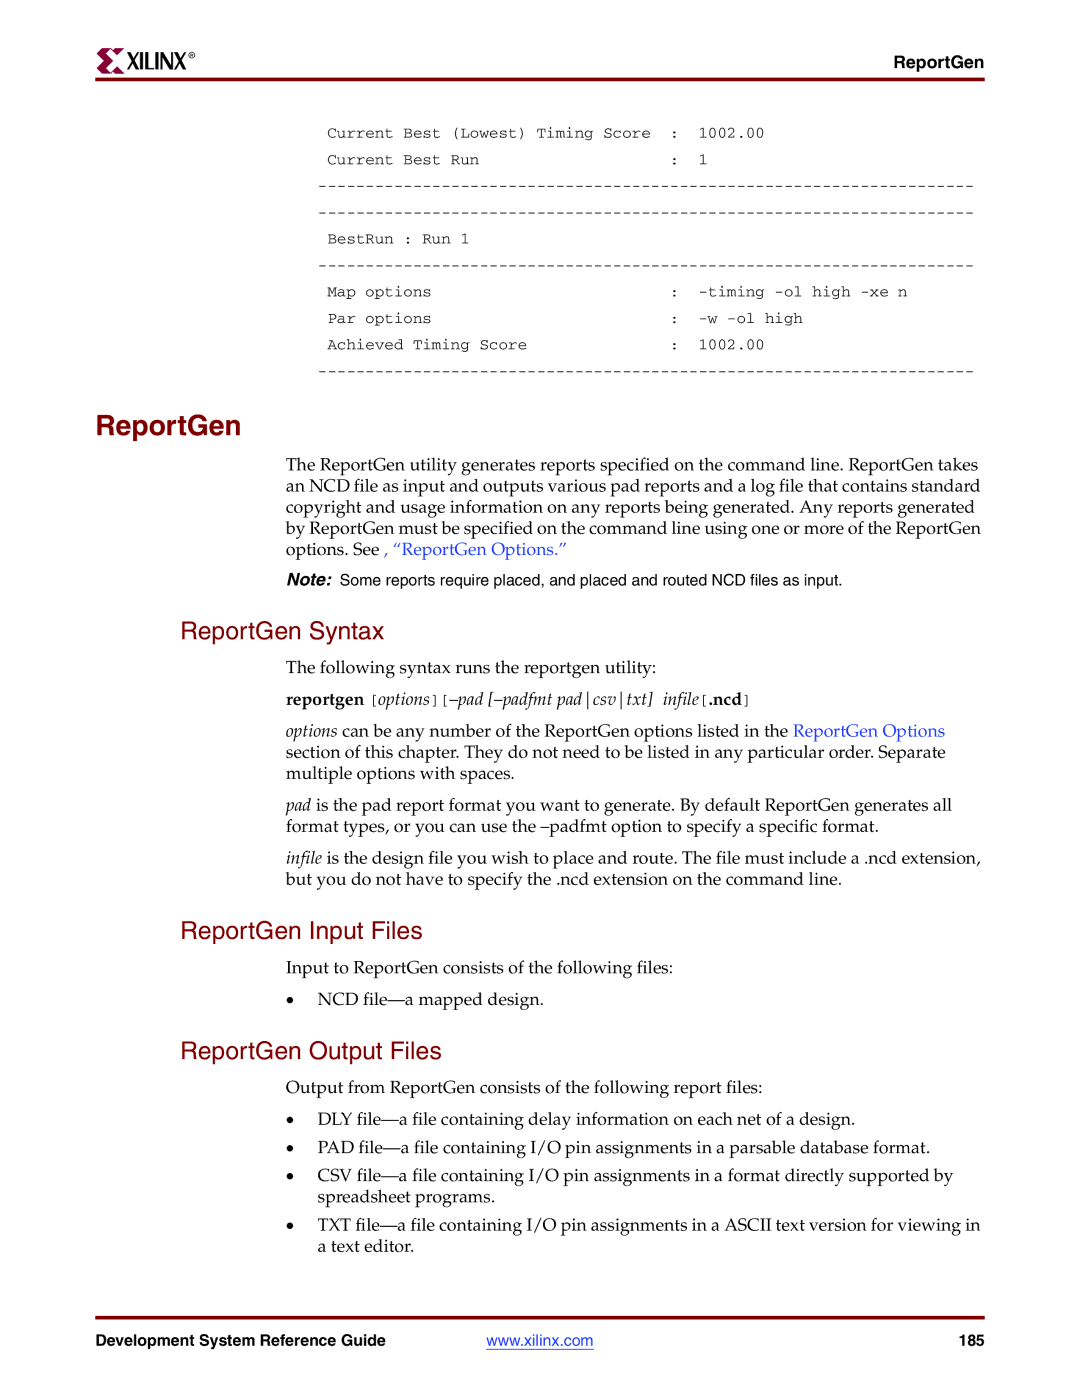 Xilinx 8.2i manual ReportGen Syntax, ReportGen Input Files, ReportGen Output Files 